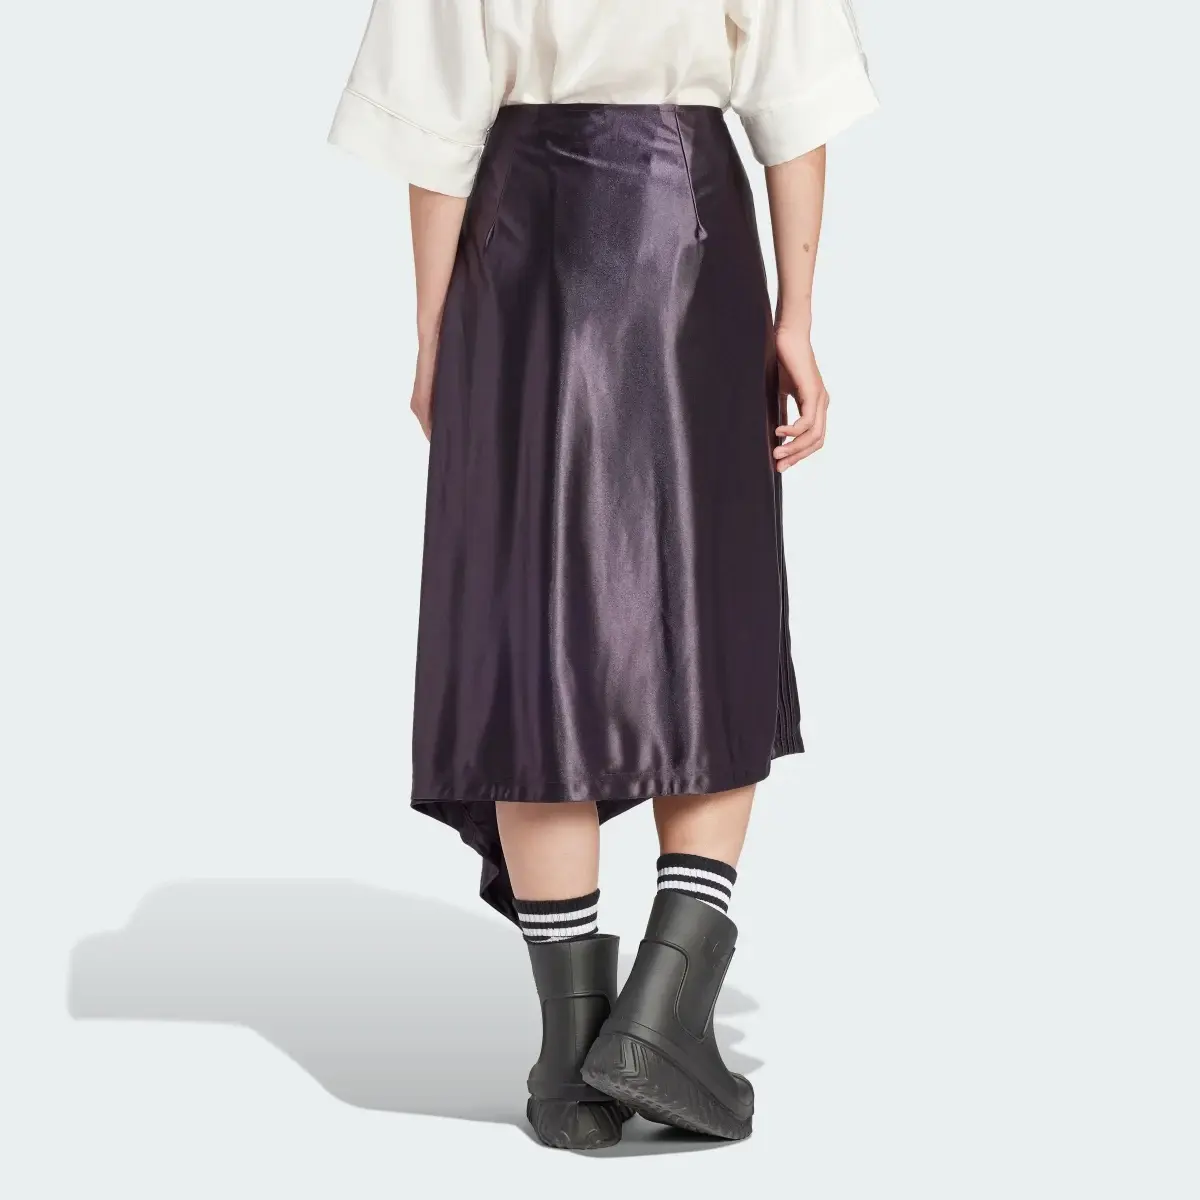 Adidas High-Waisted Satin Skirt. 2